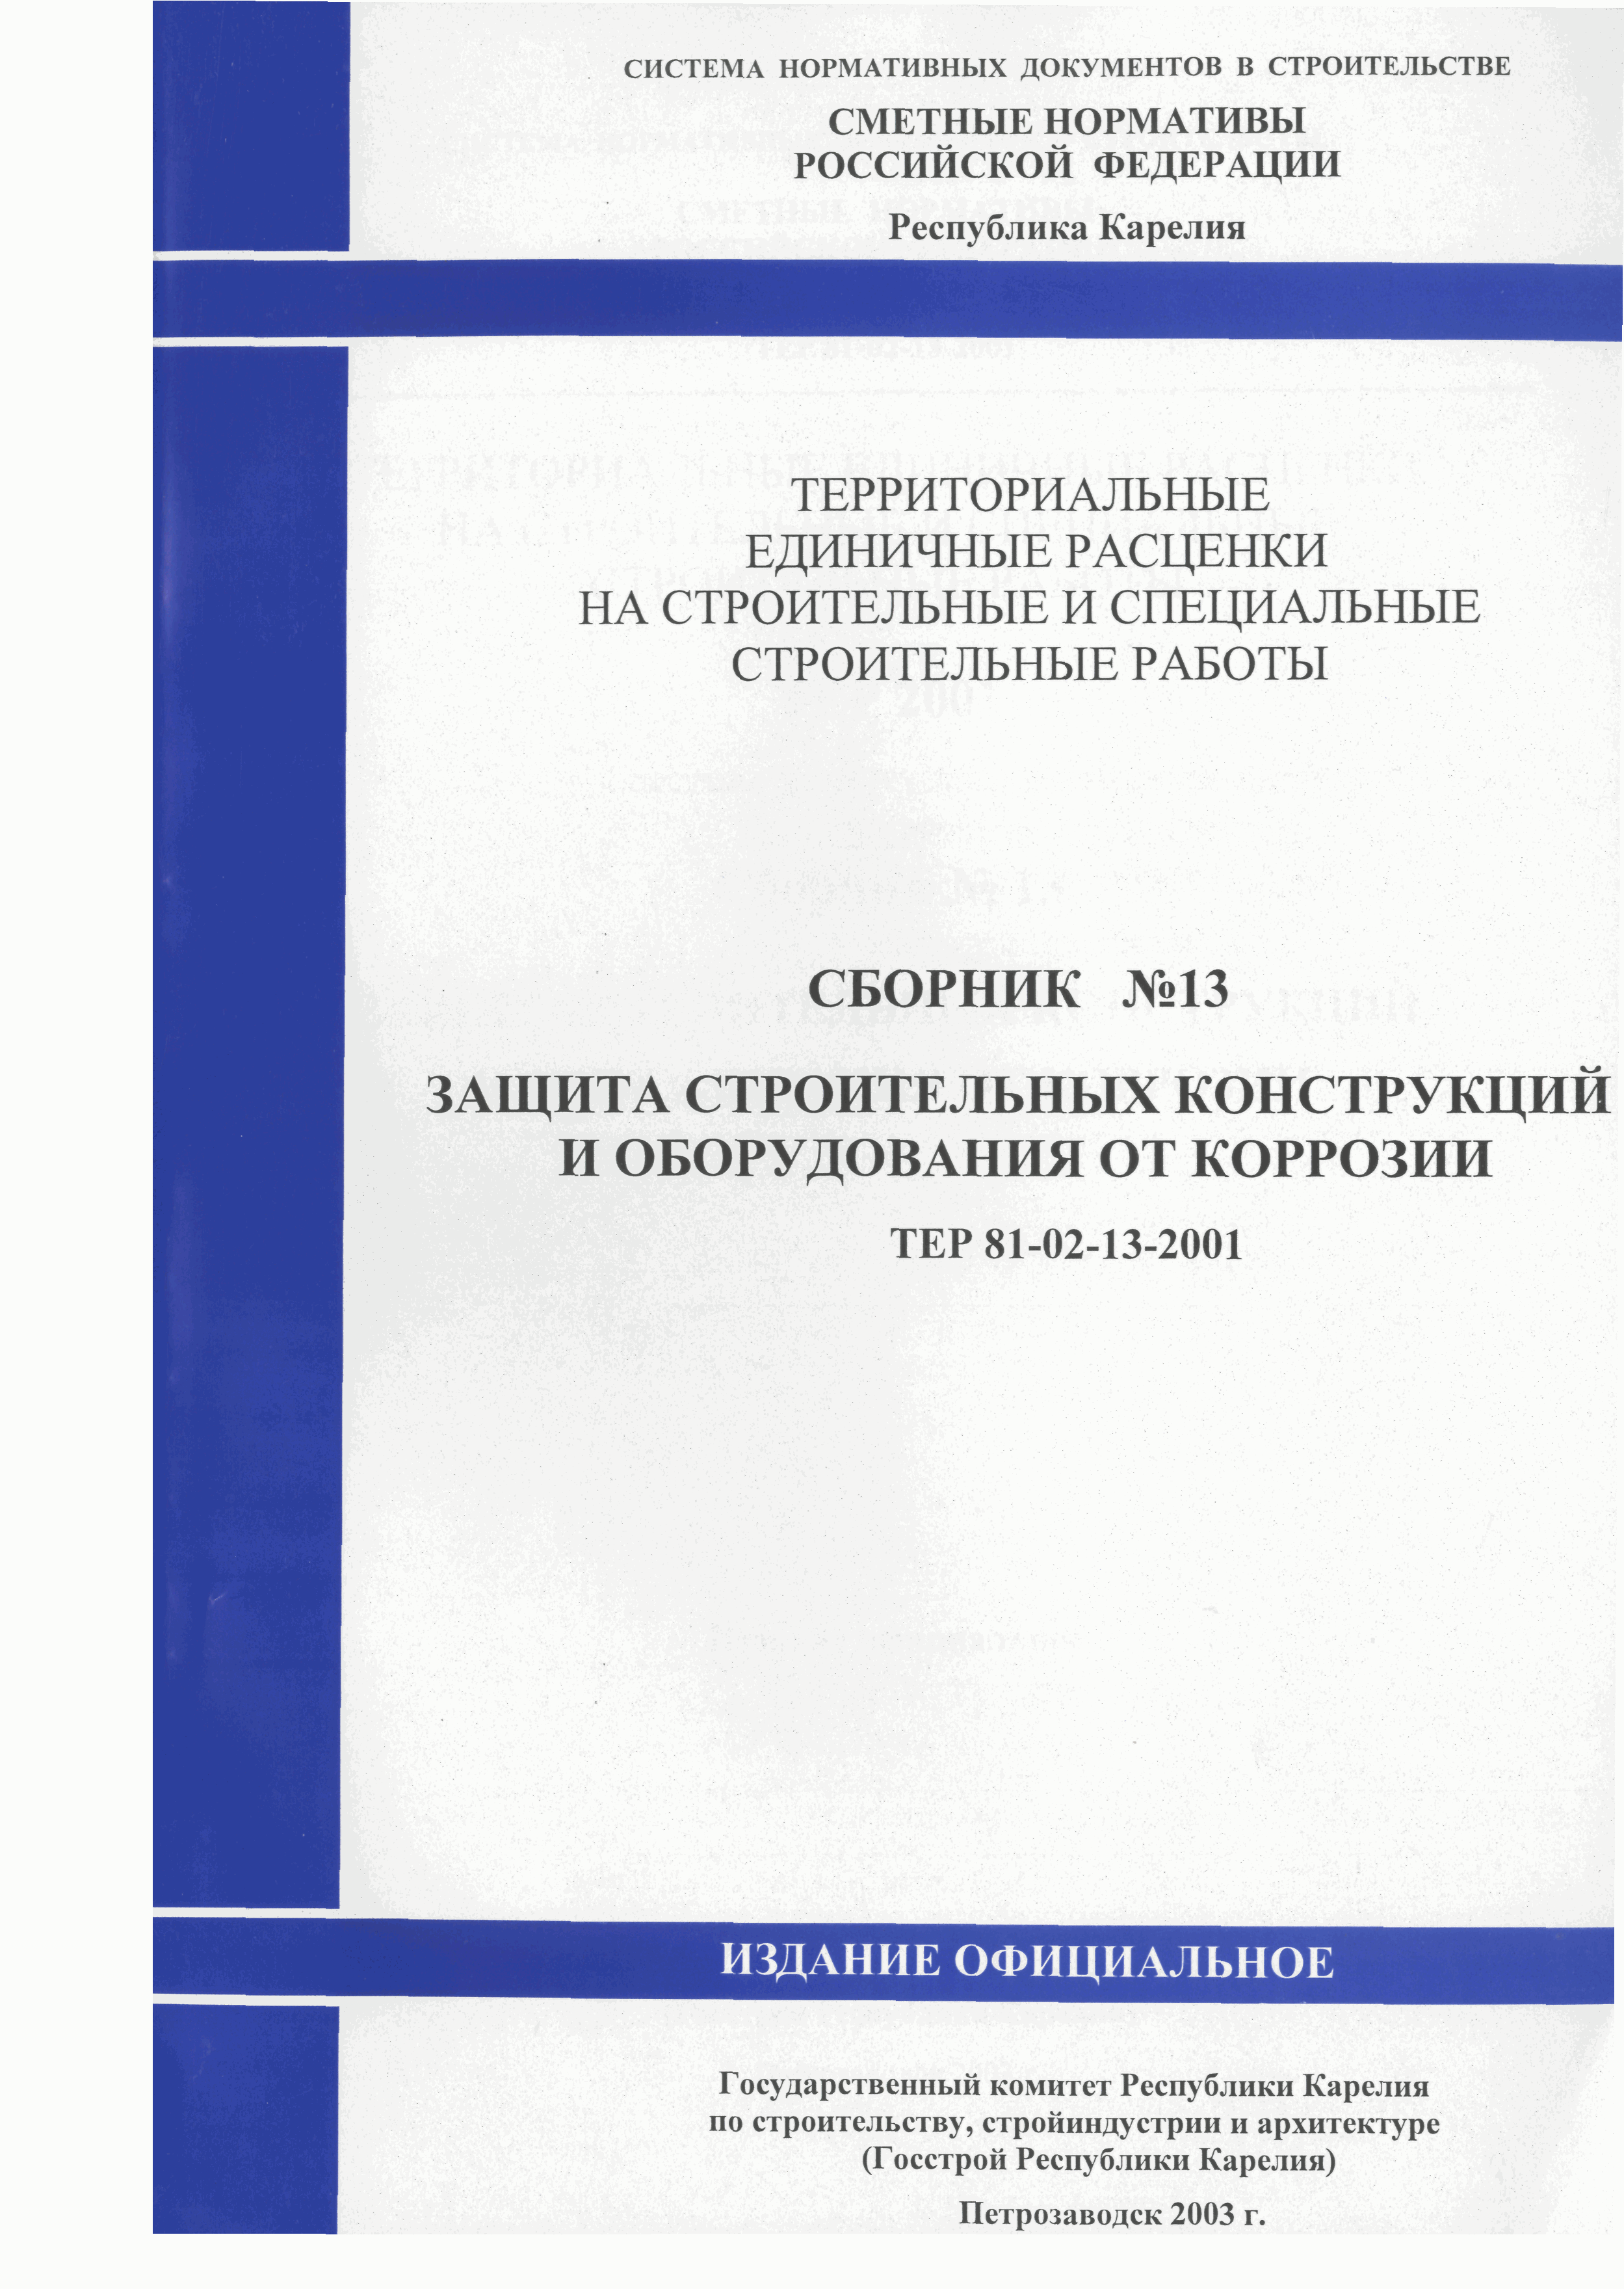 ТЕР Республика Карелия 2001-13